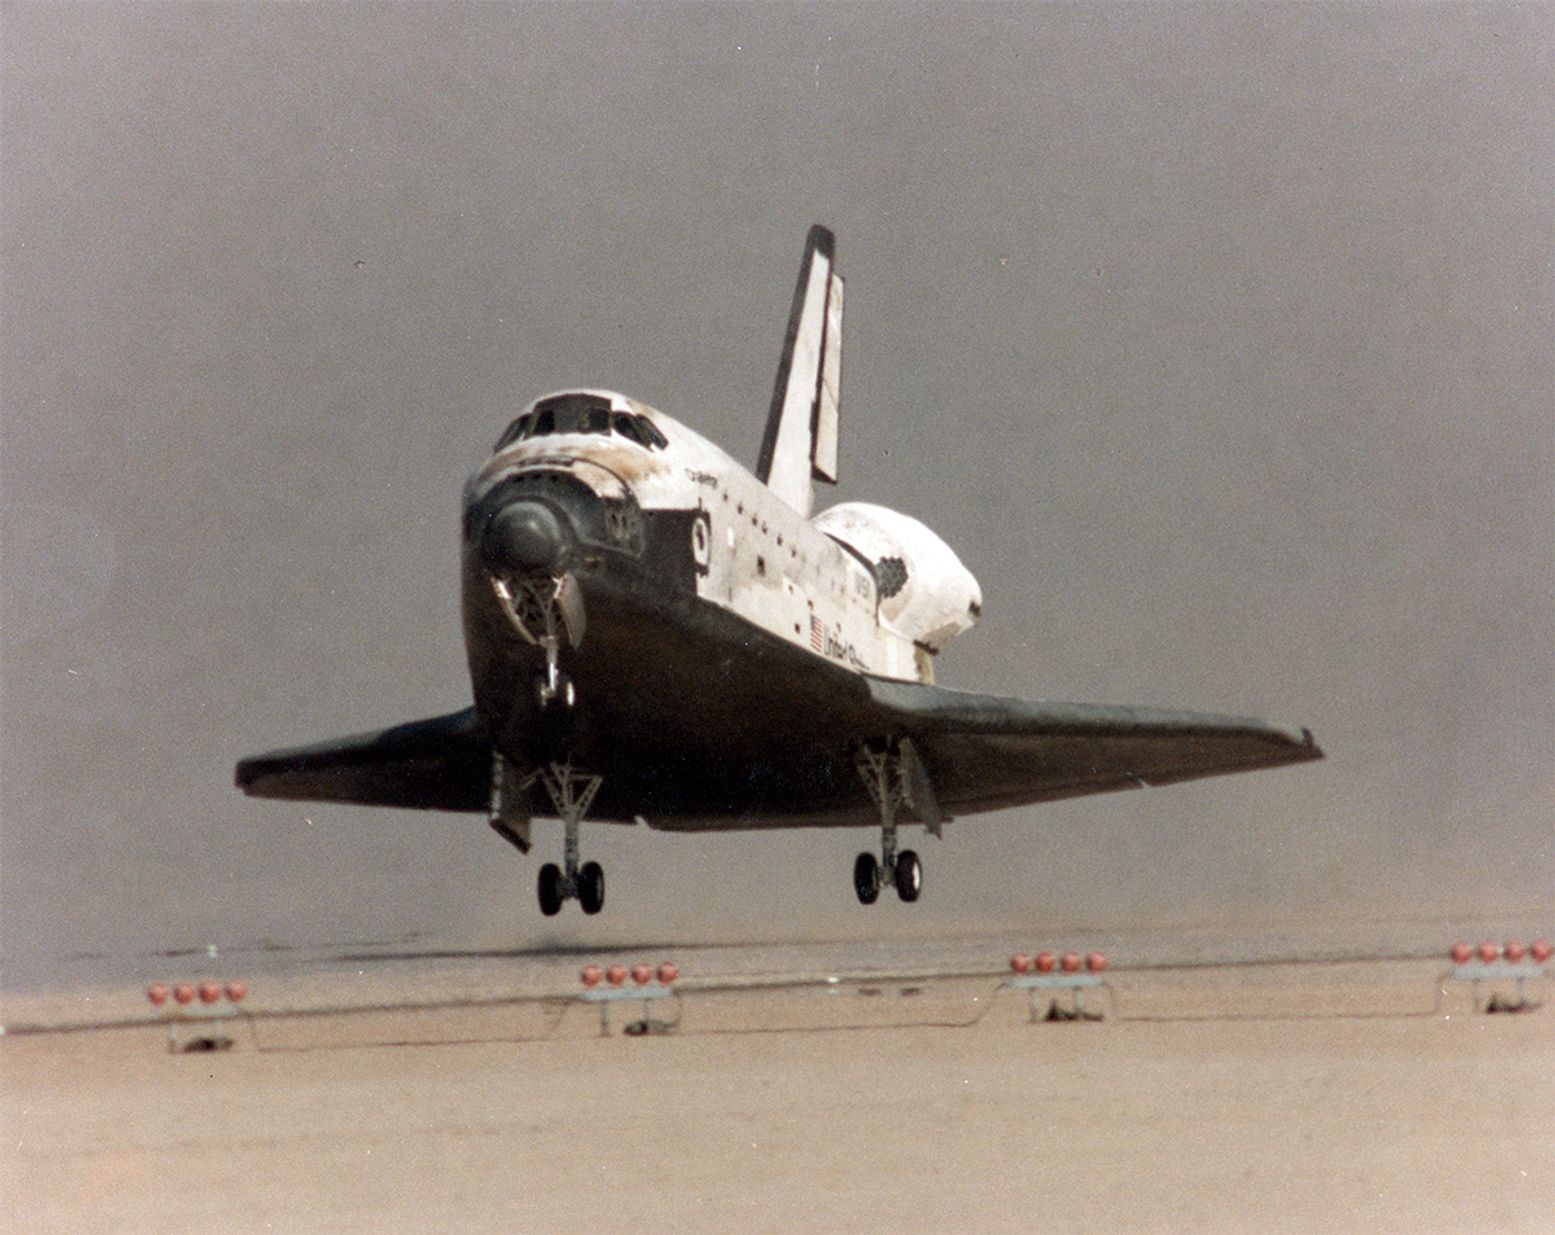 space shuttle crash landing